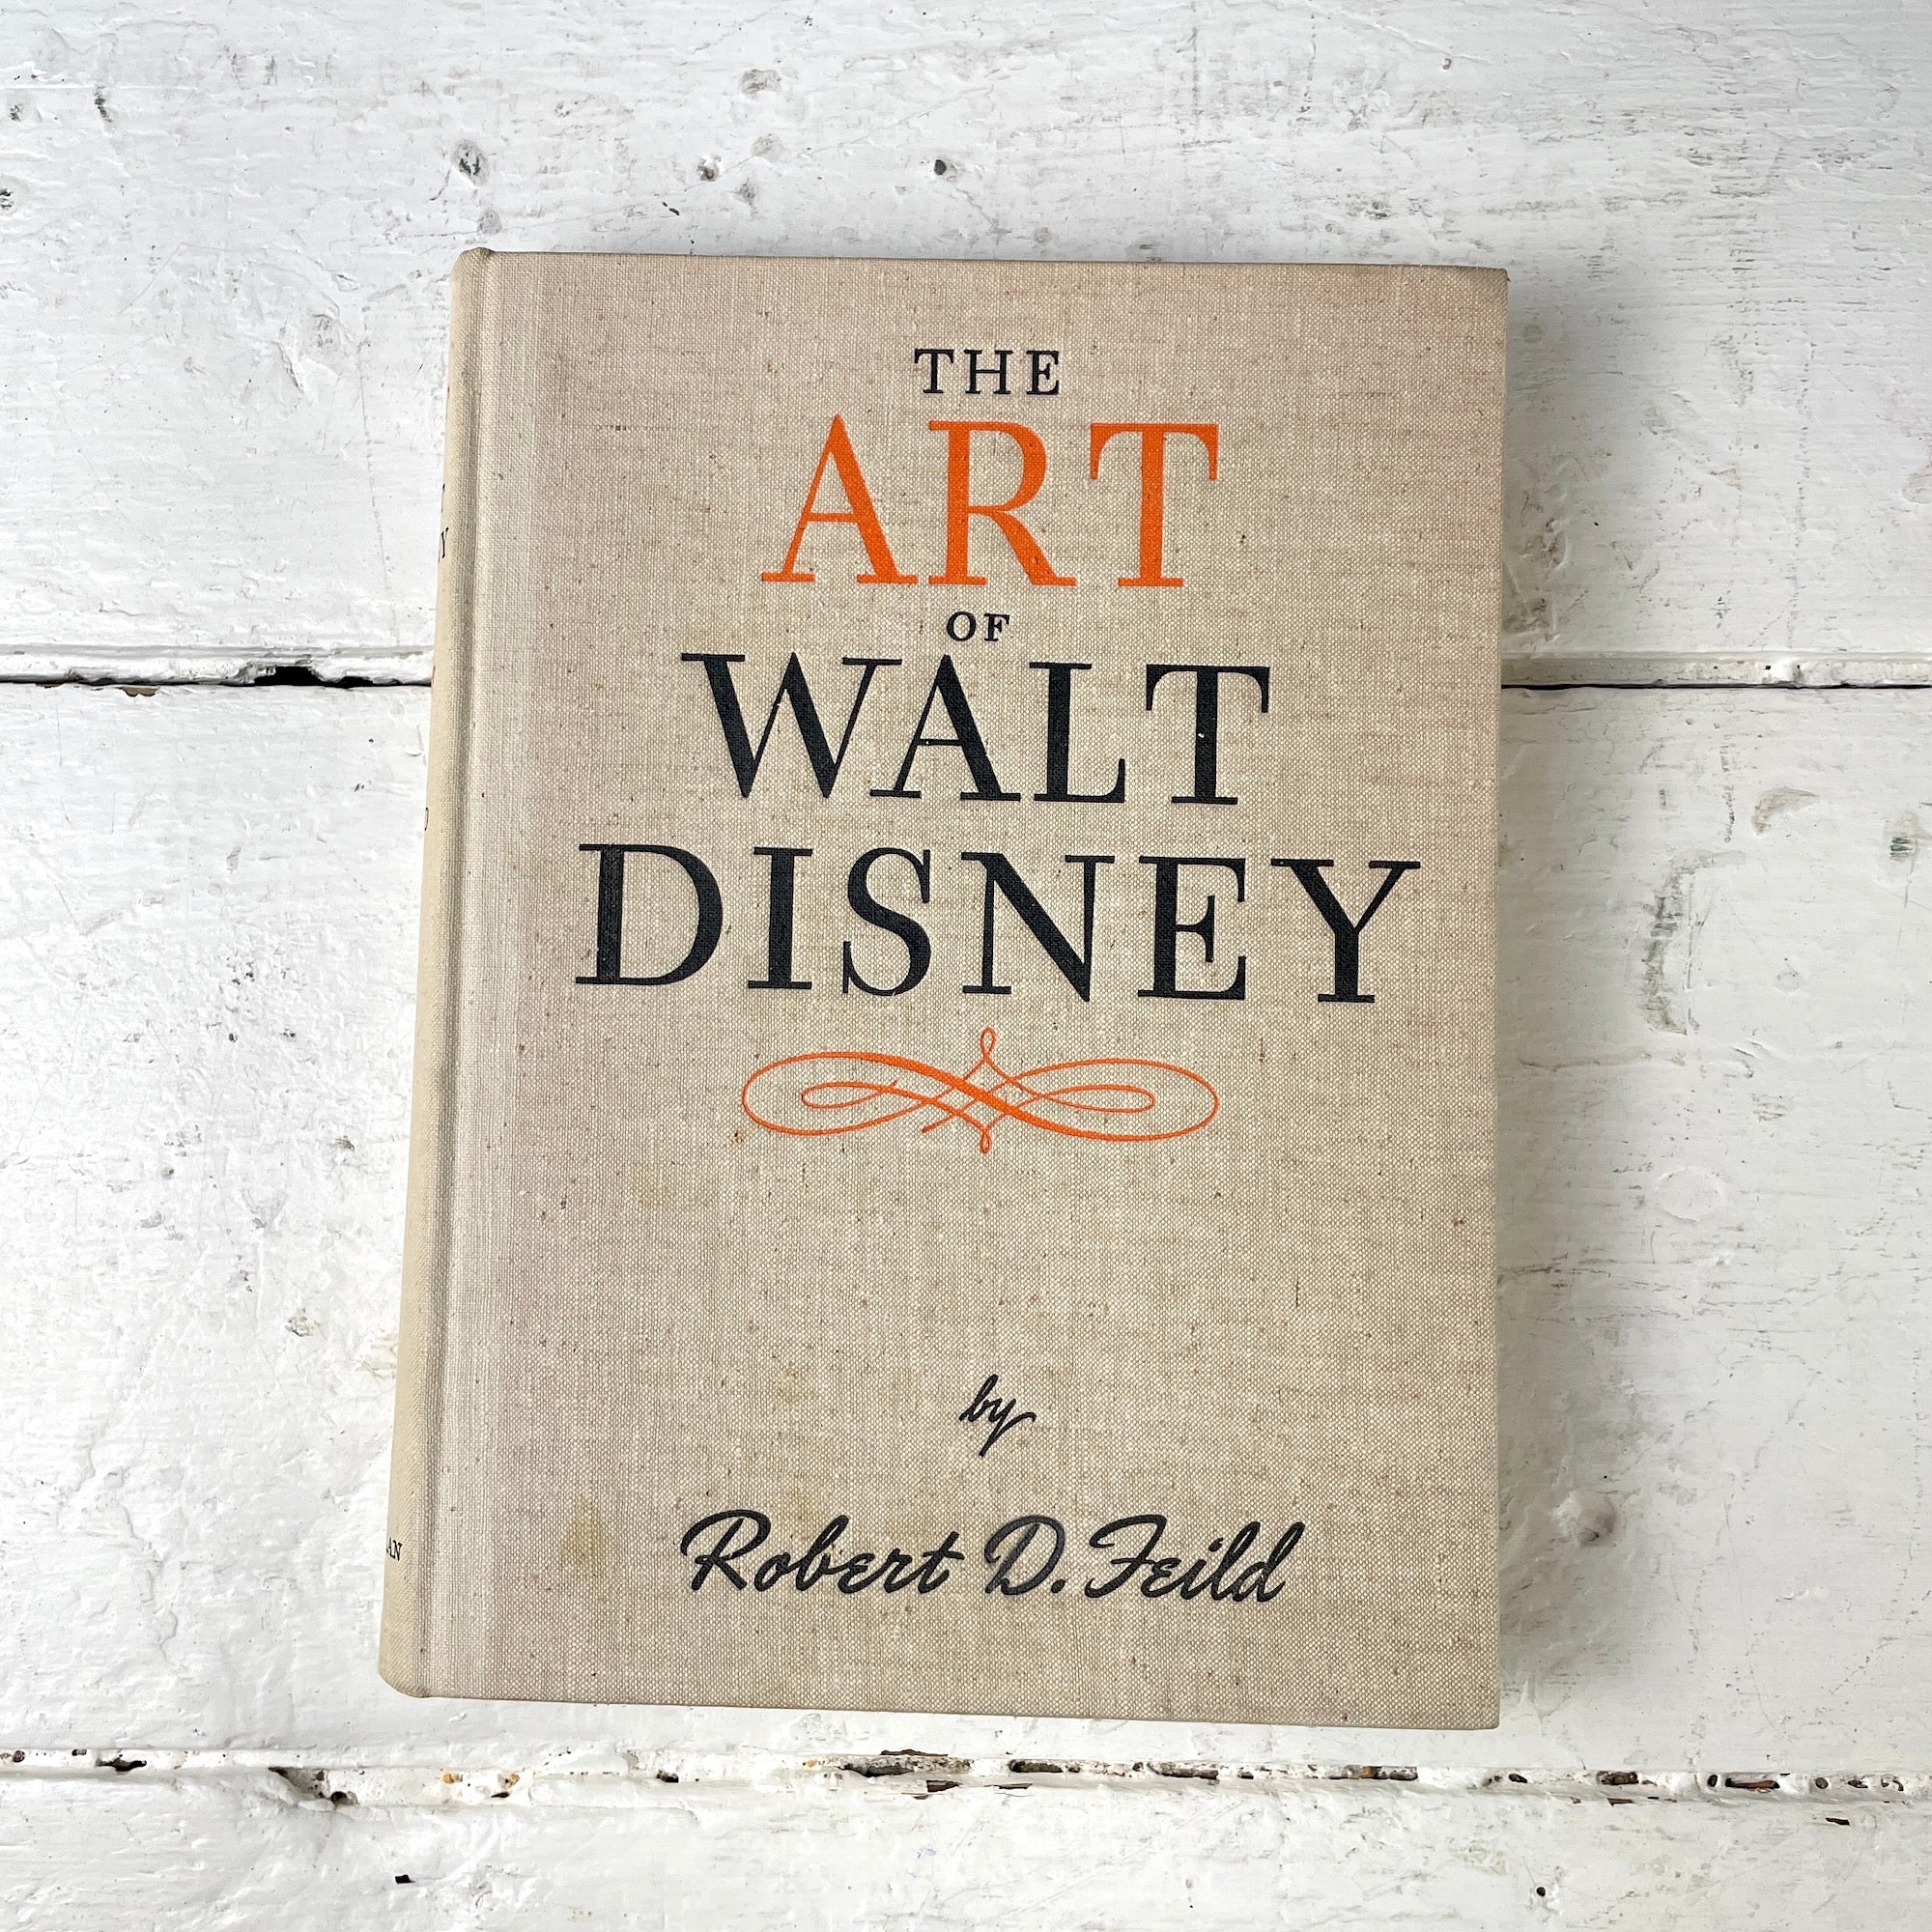 The Art of Walt Disney - Robert D. Feild - 1942 hardcover